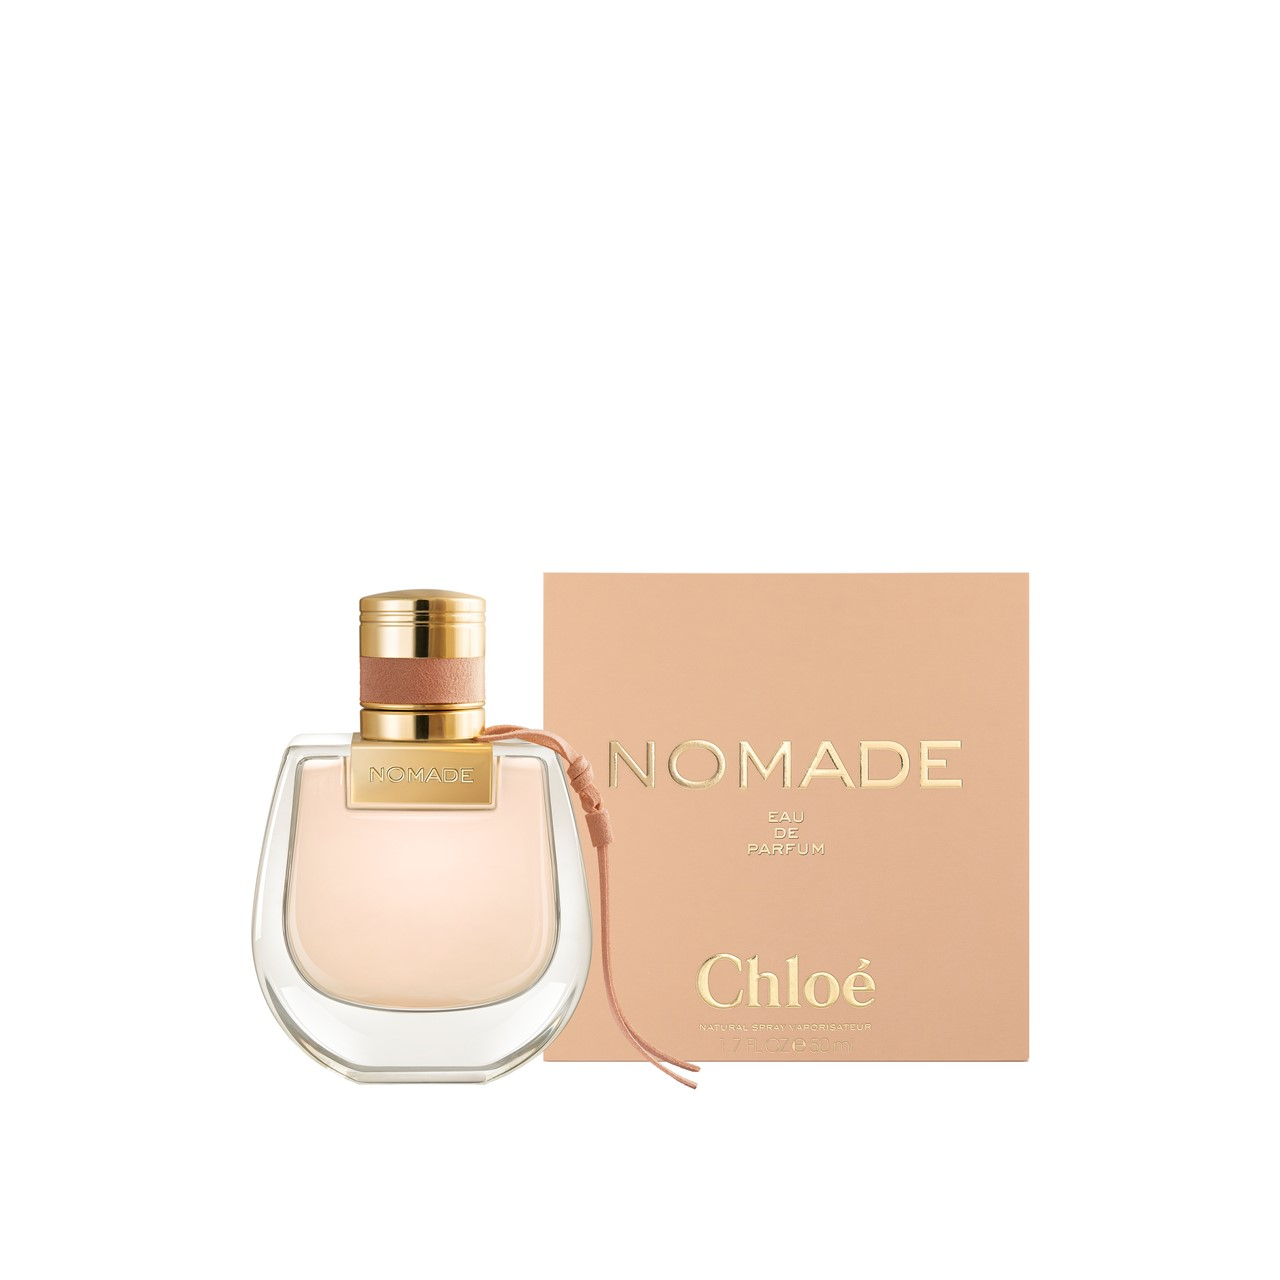 Chloe Nomade Absolu de Parfum EDP 50ml for Women